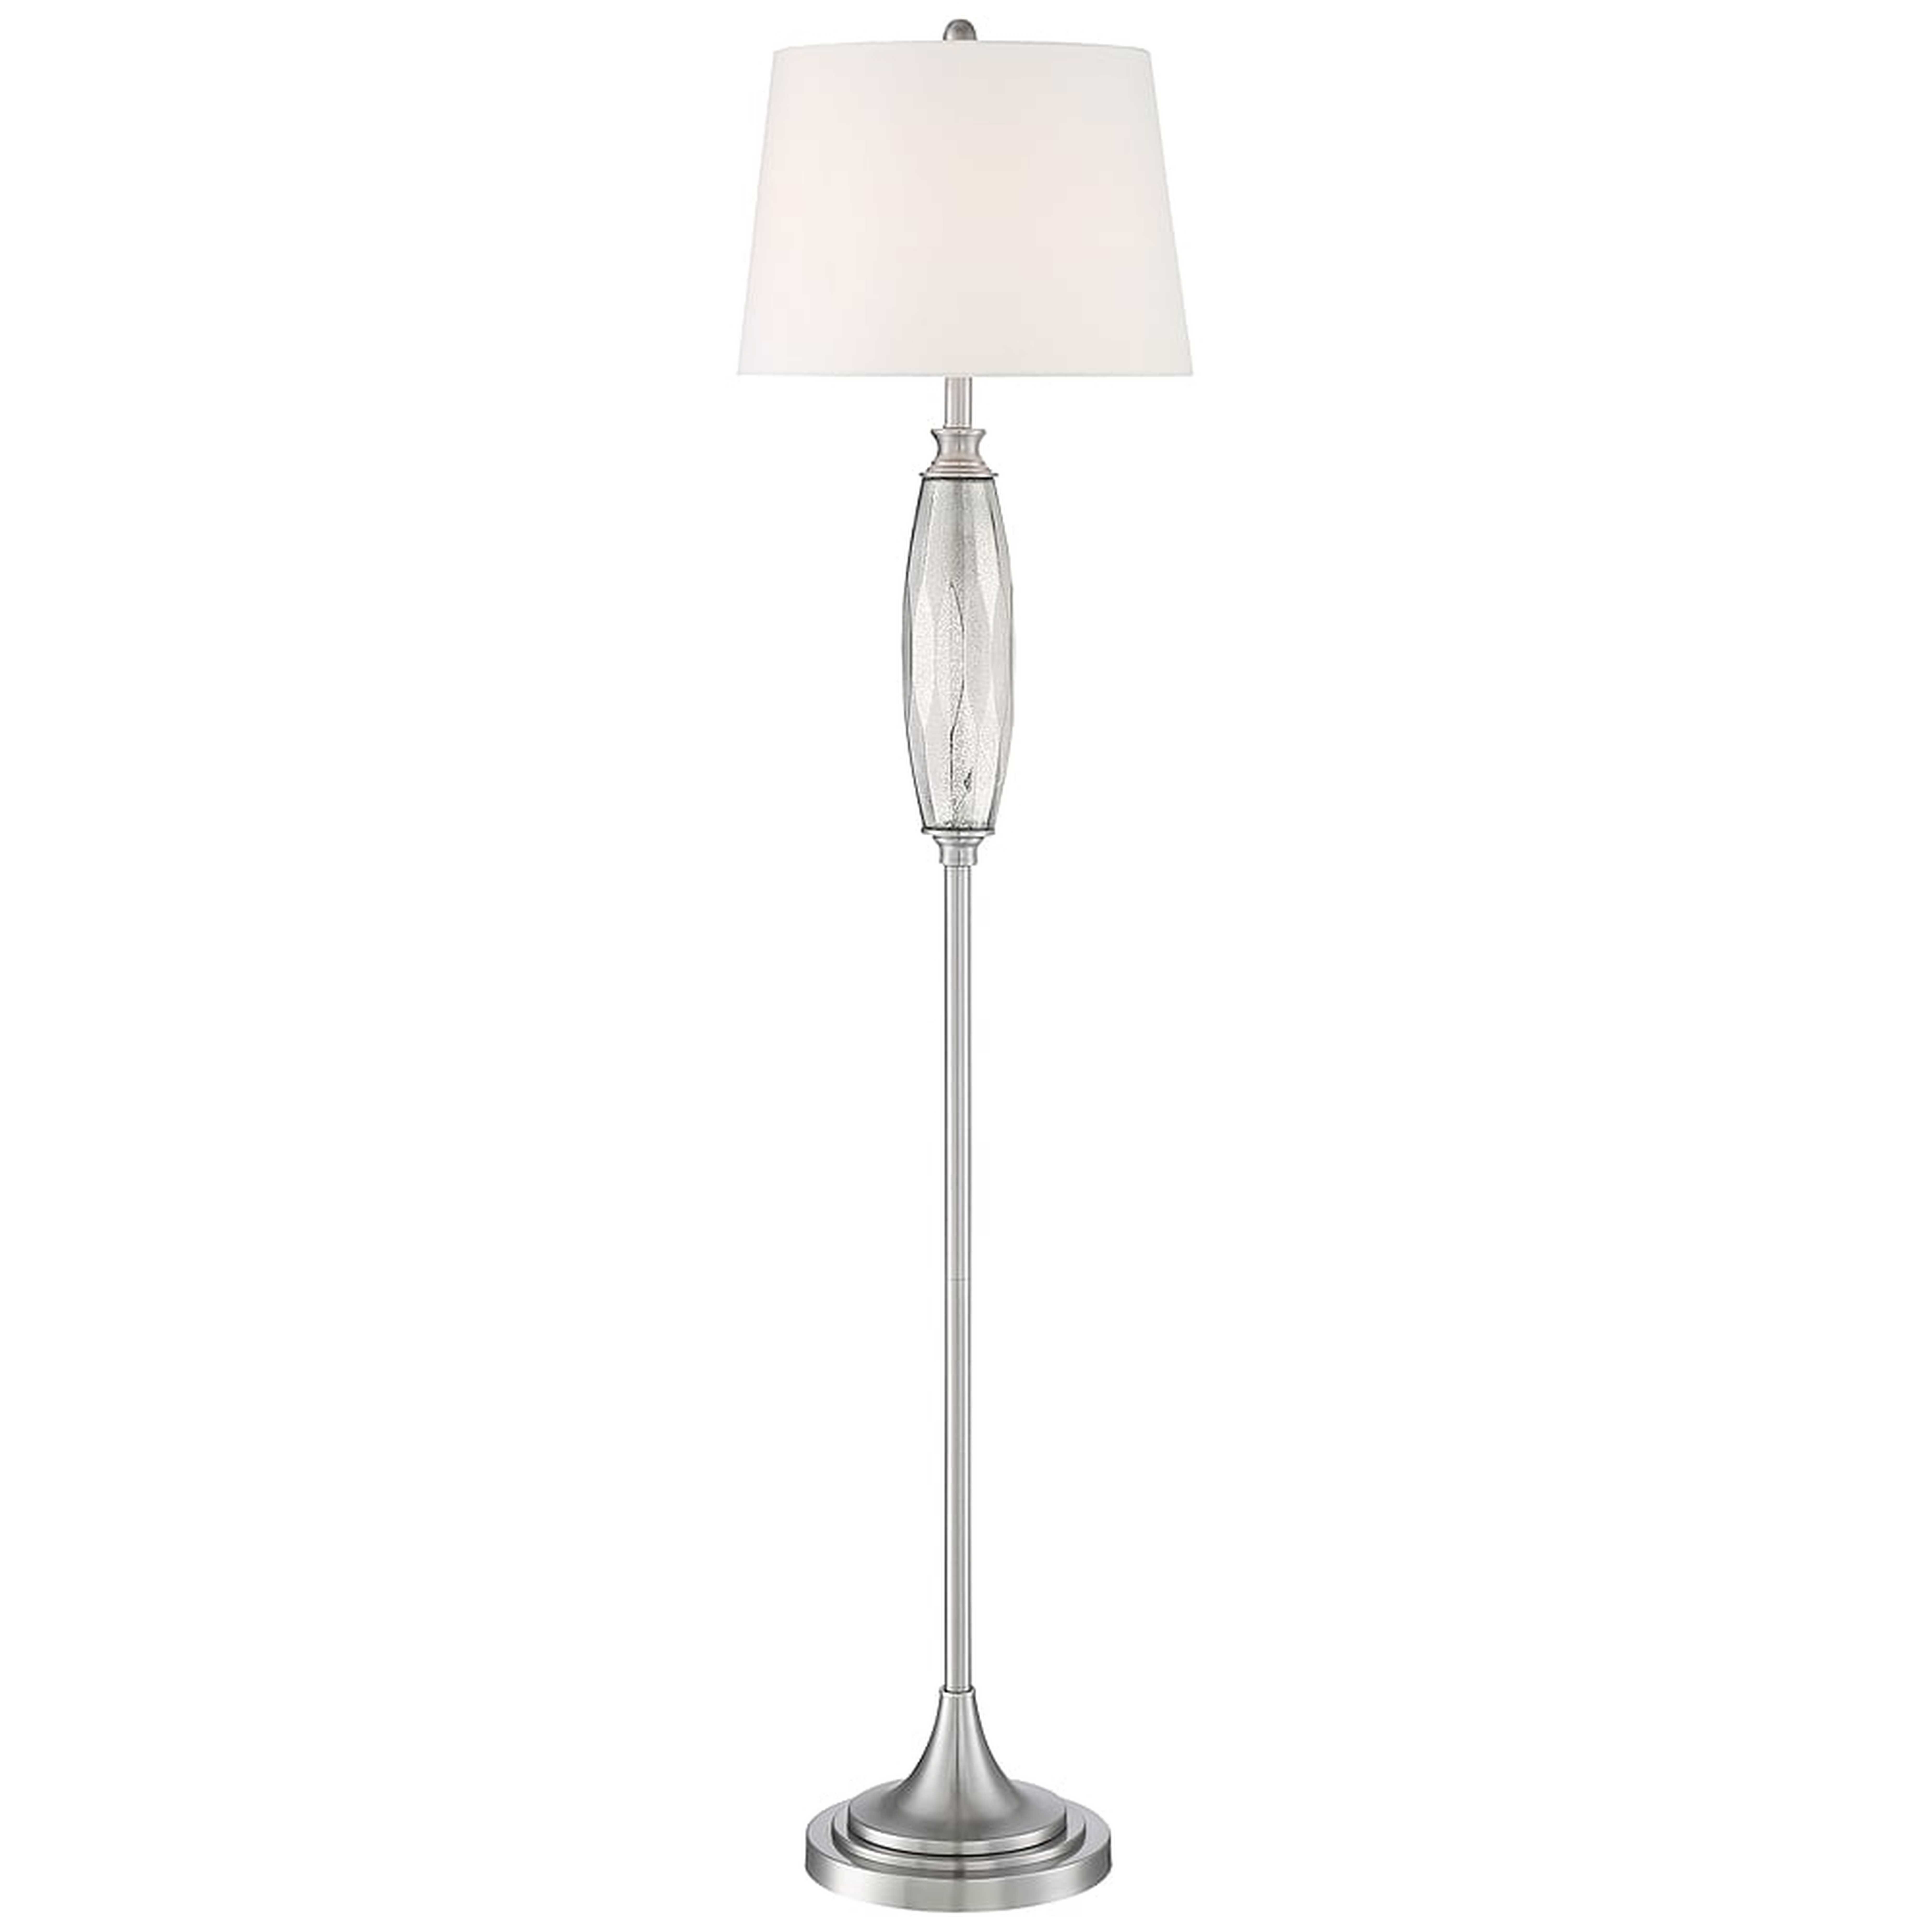 Carol Mercury Glass Brushed Nickel Floor Lamp - Style # 72X79 - Lamps Plus